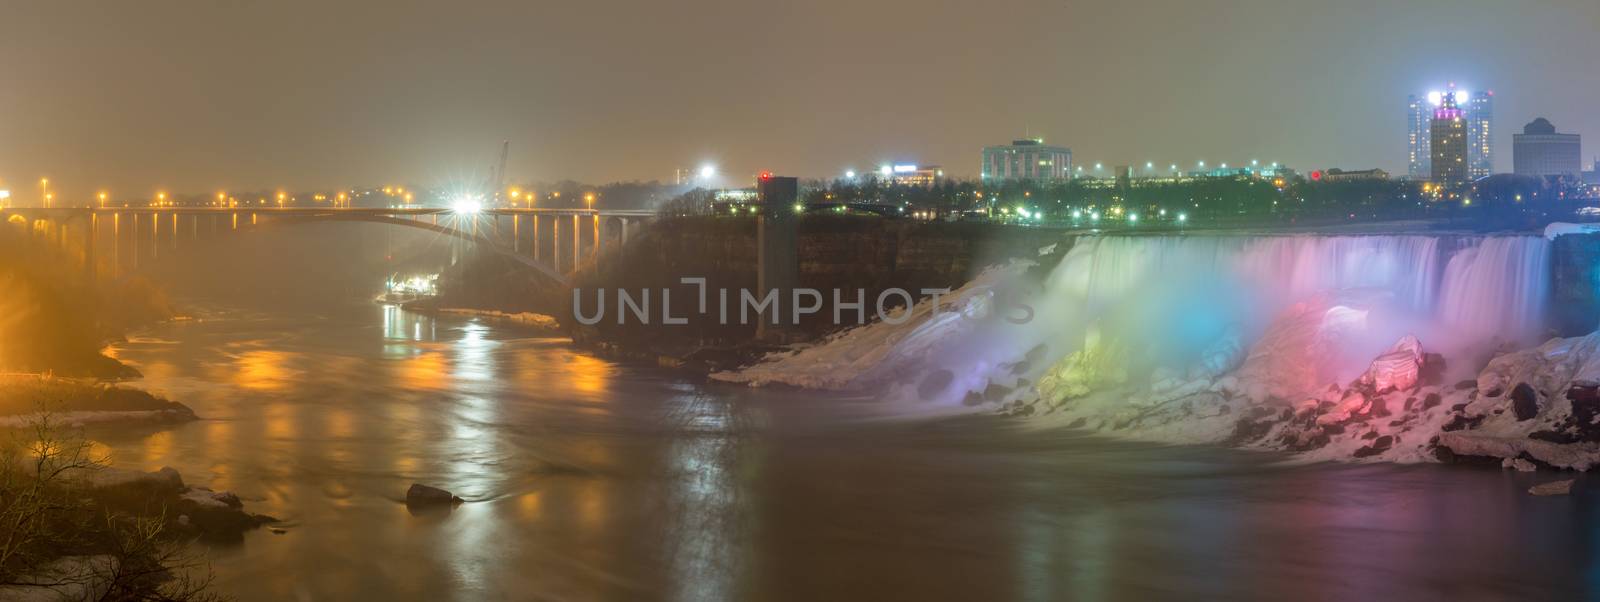 american Falls night panorama by vichie81